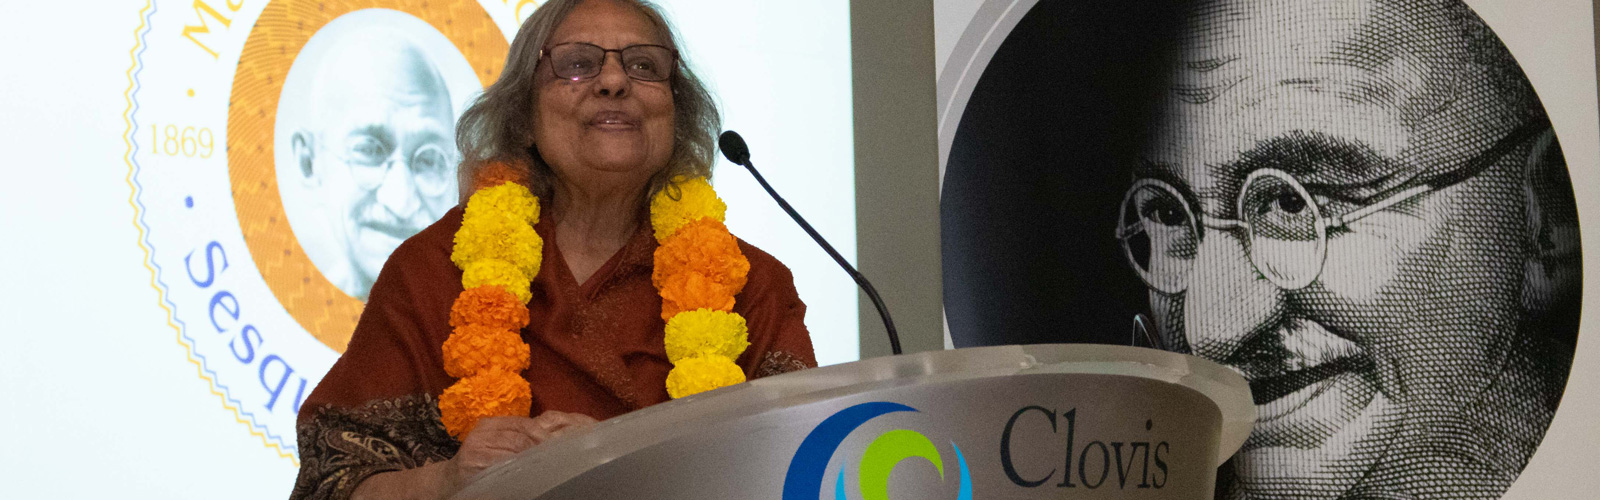 Ms. Ela Gandhi standing at the podium